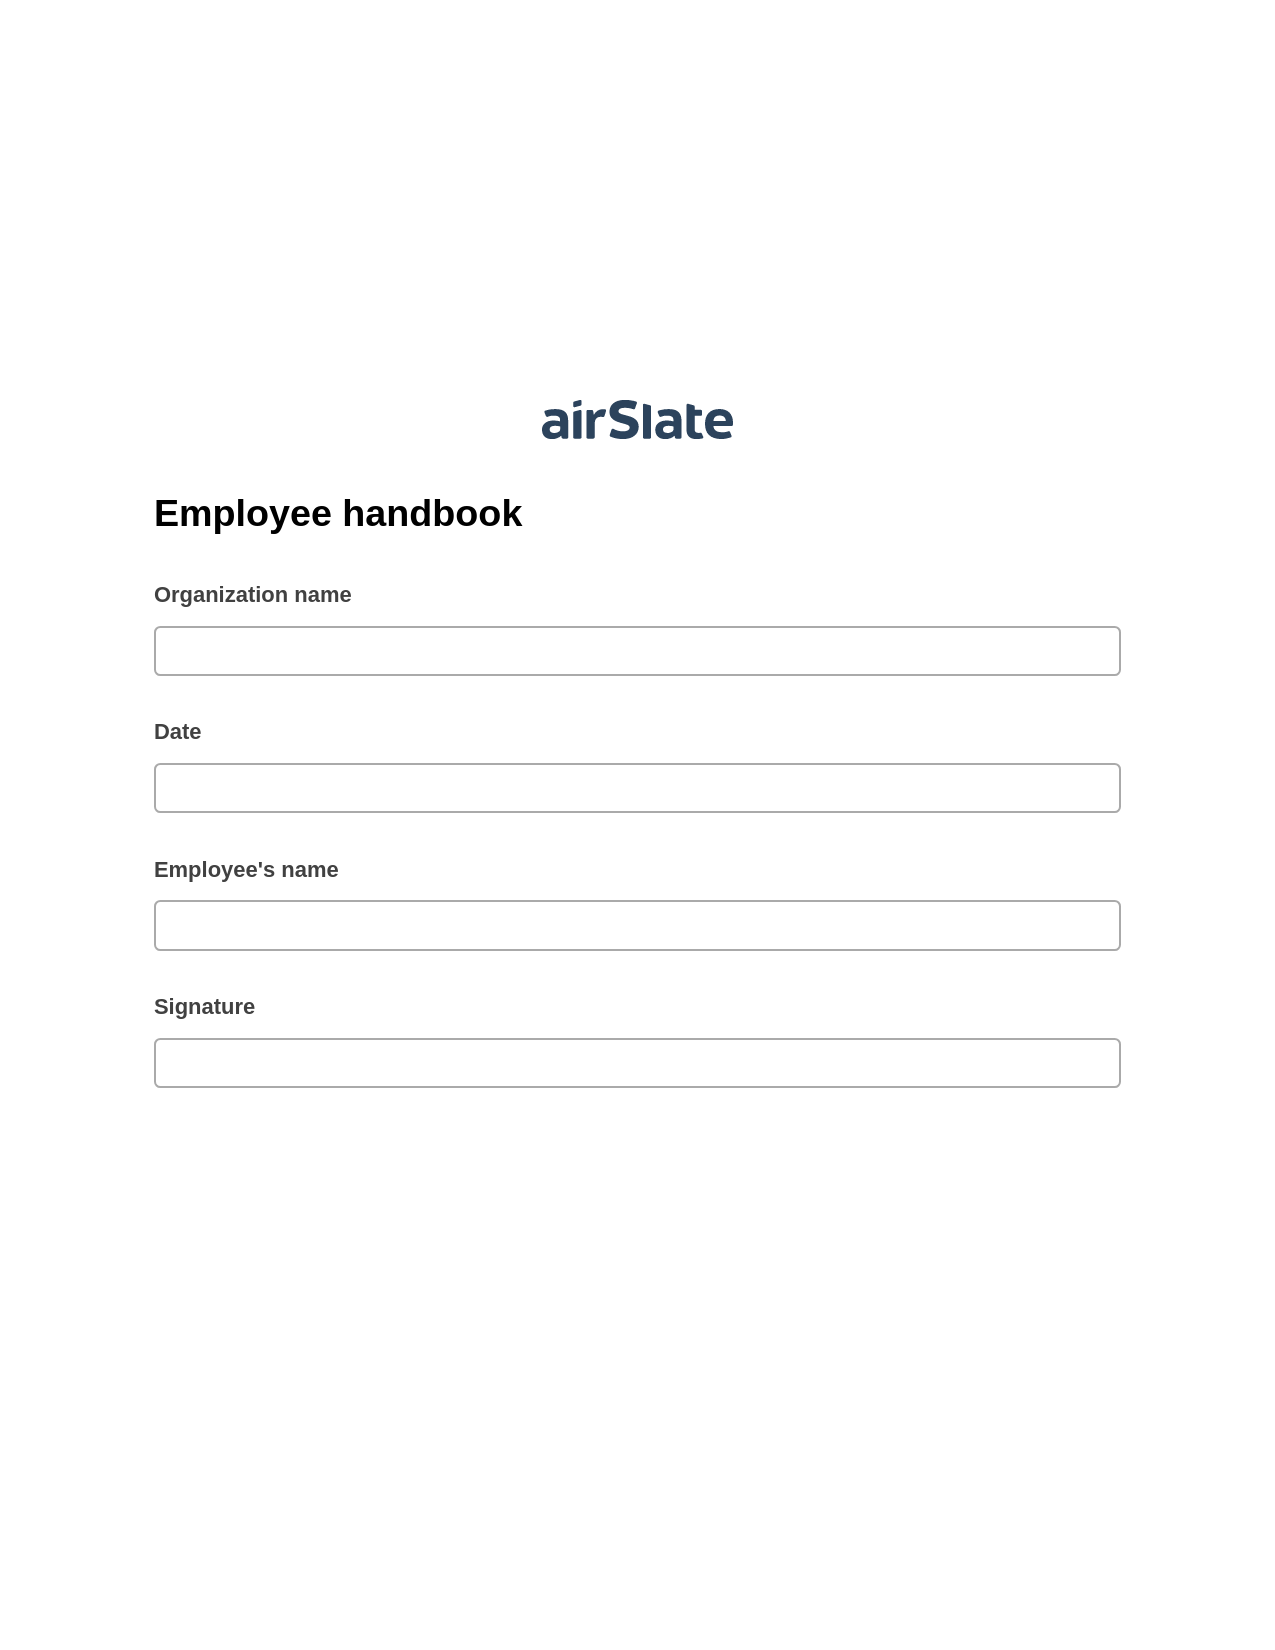 Multirole Employee handbook Pre-fill from another Slate Bot, Google Sheet Two-Way Binding Bot, Post-finish Document Bot